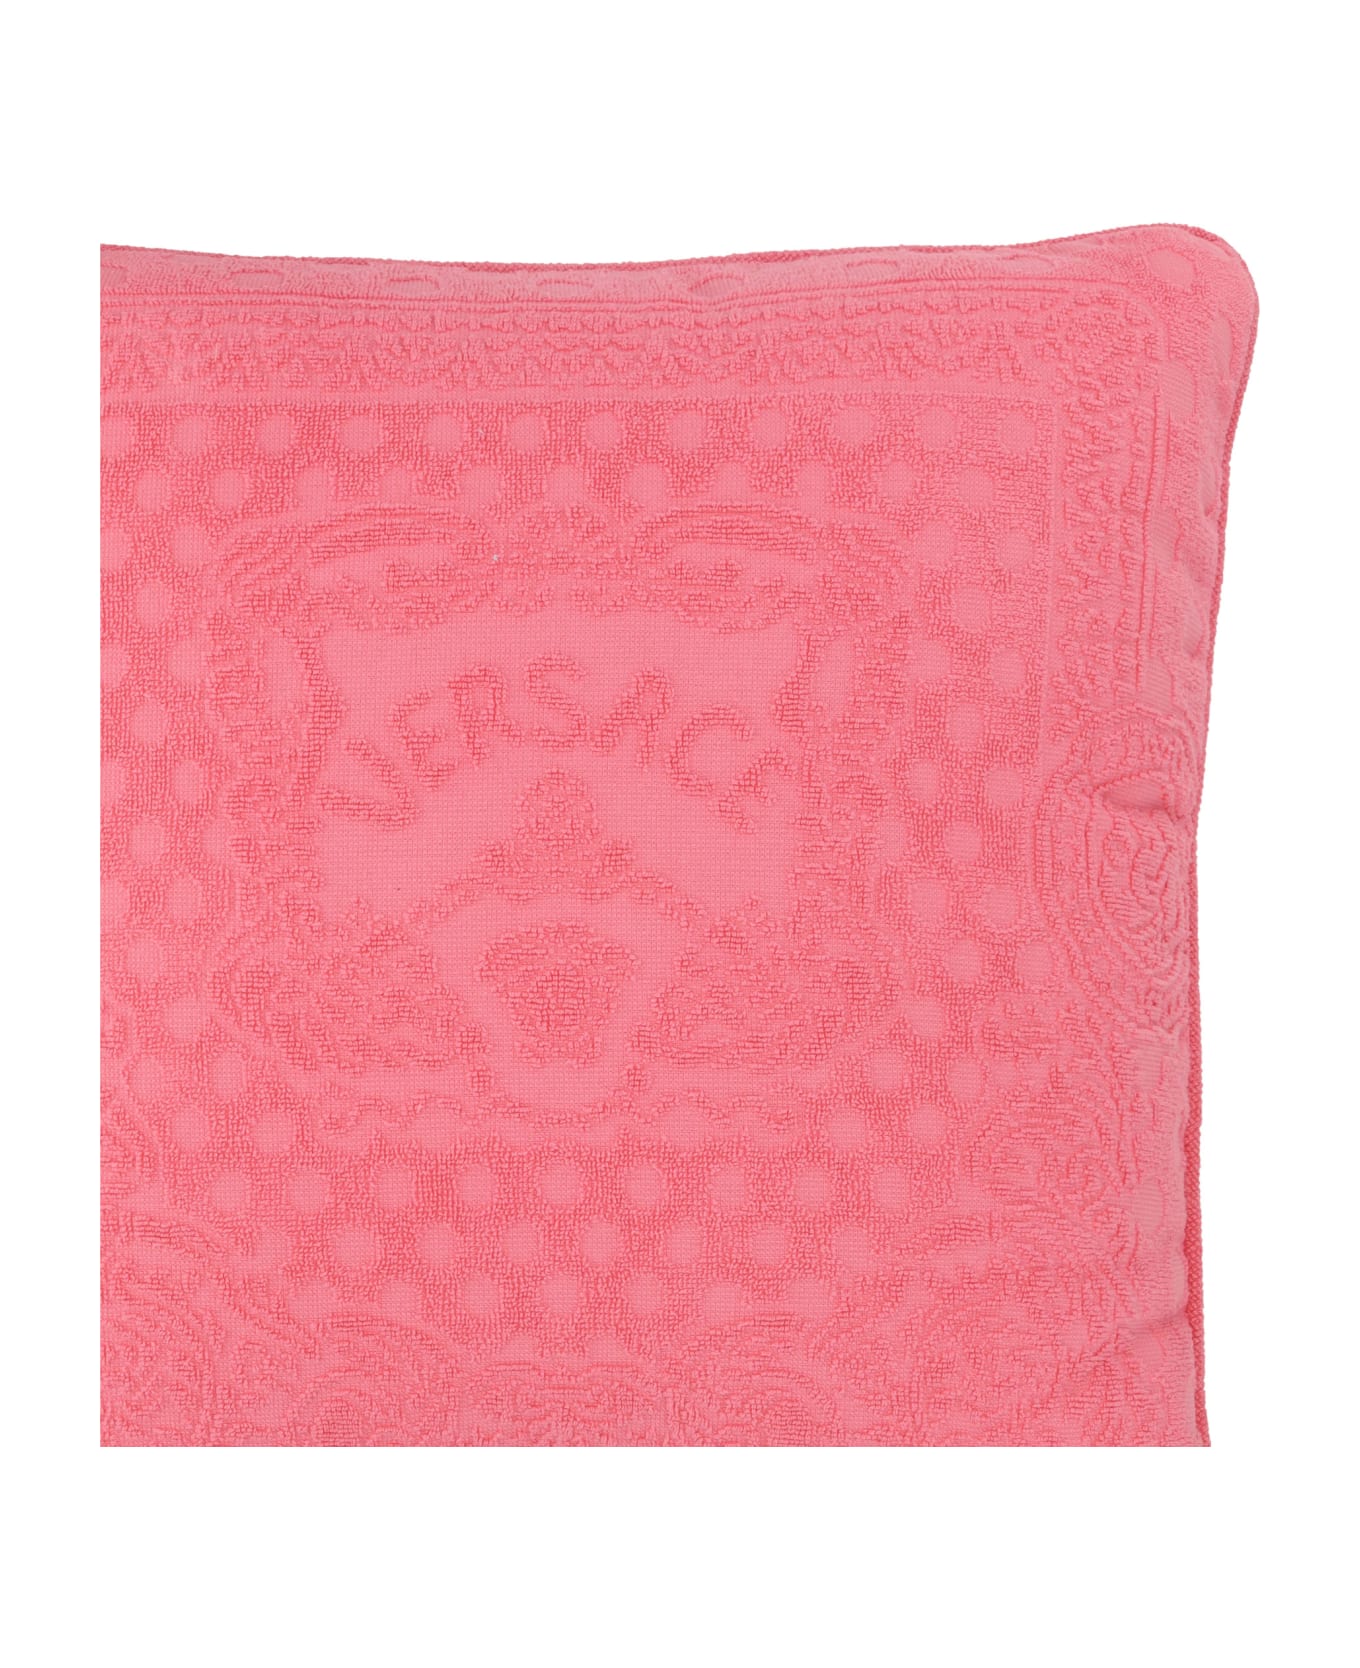 Versace Dua Lipa X Versace Pillow - Flamingo